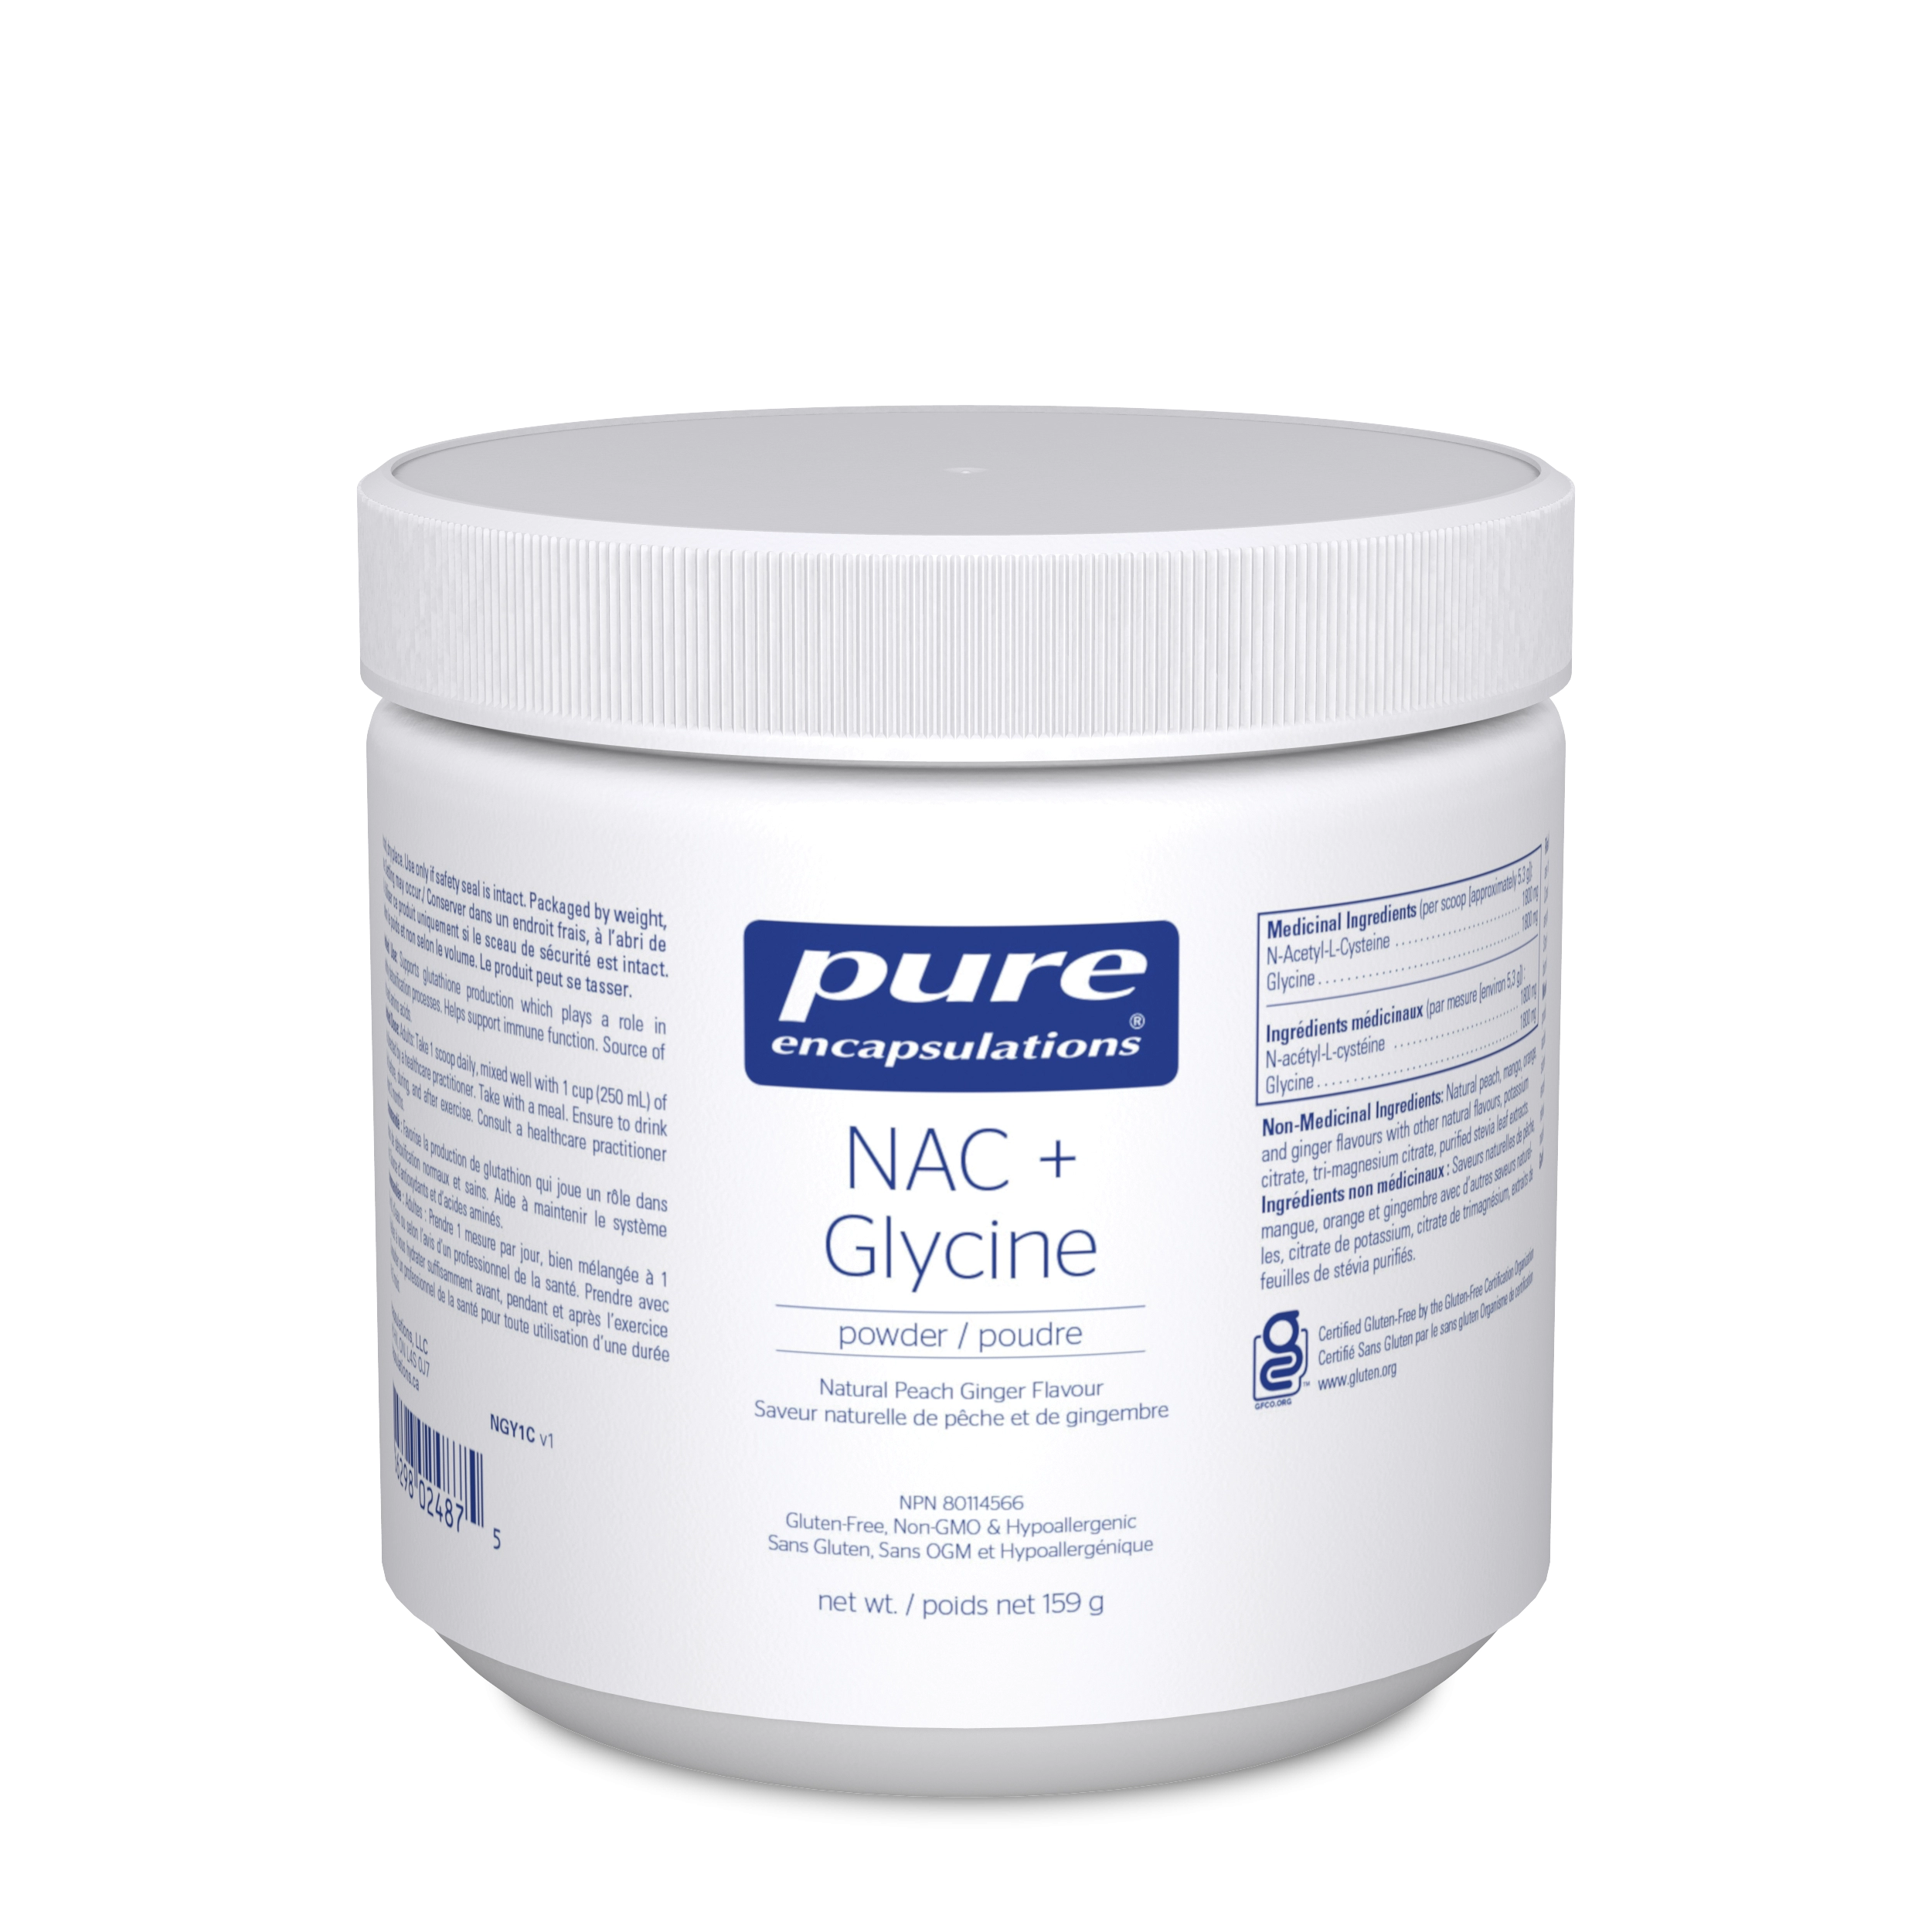 NAC+Glycine by Pure Encapsulations